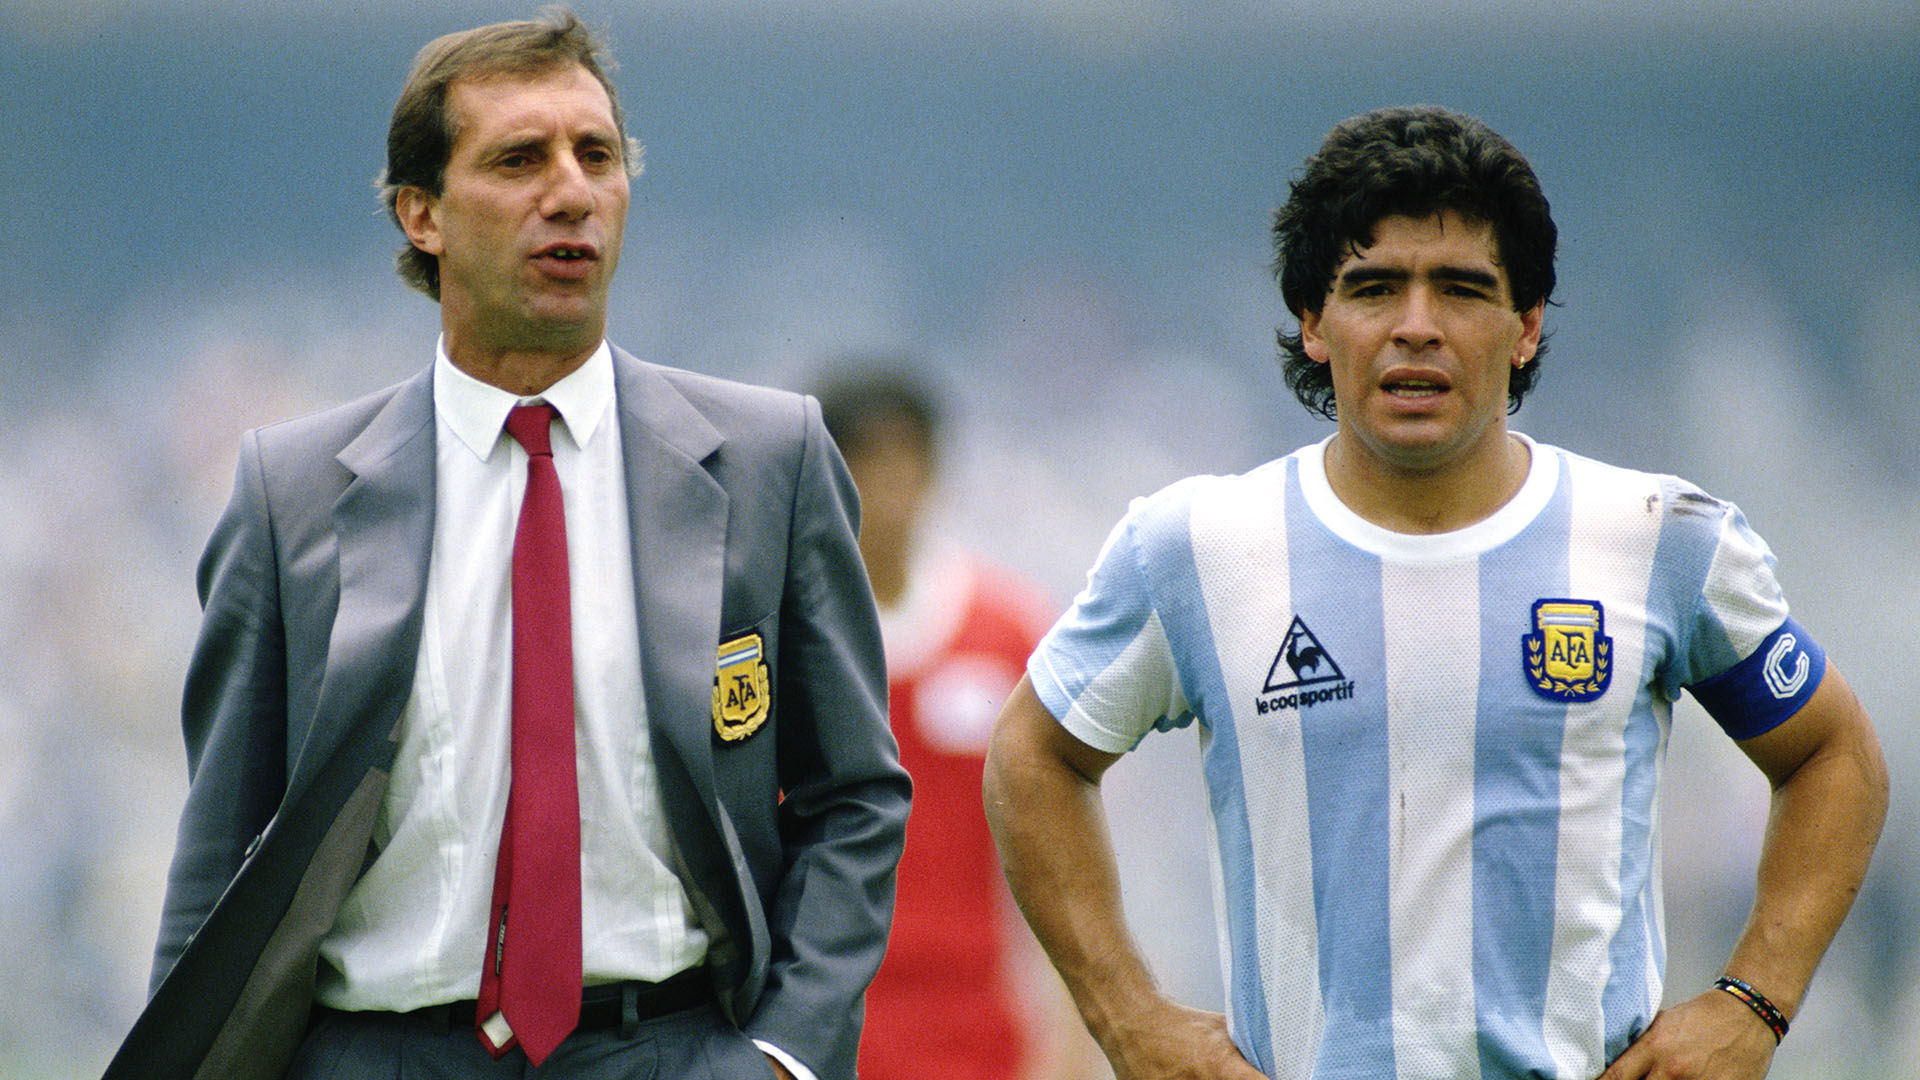 Bilardo junto a Maradona en México 86, el momento cumbre en la carrera de ambos